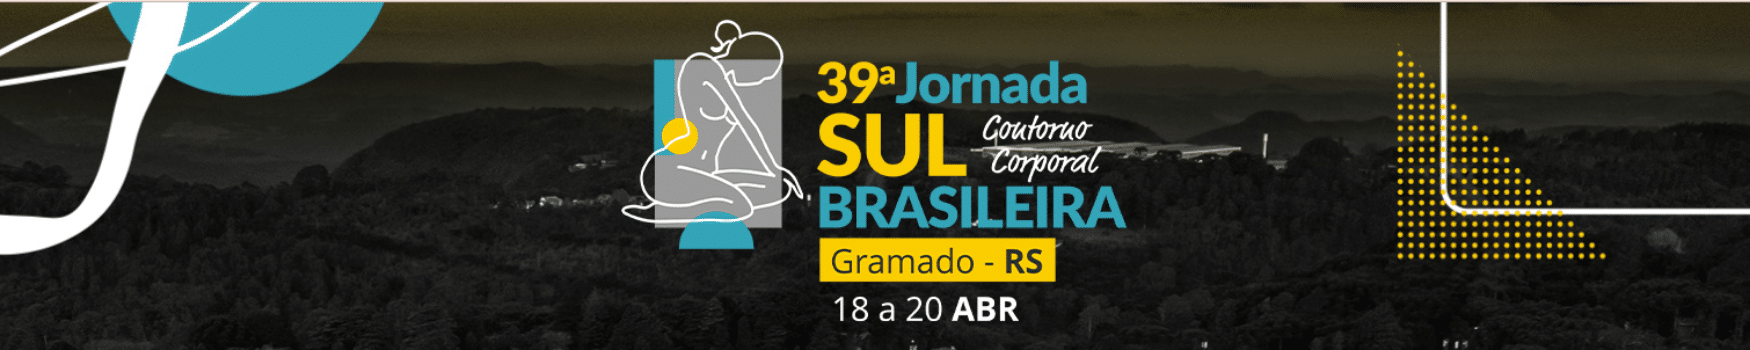 Jornada Sul Brasileira